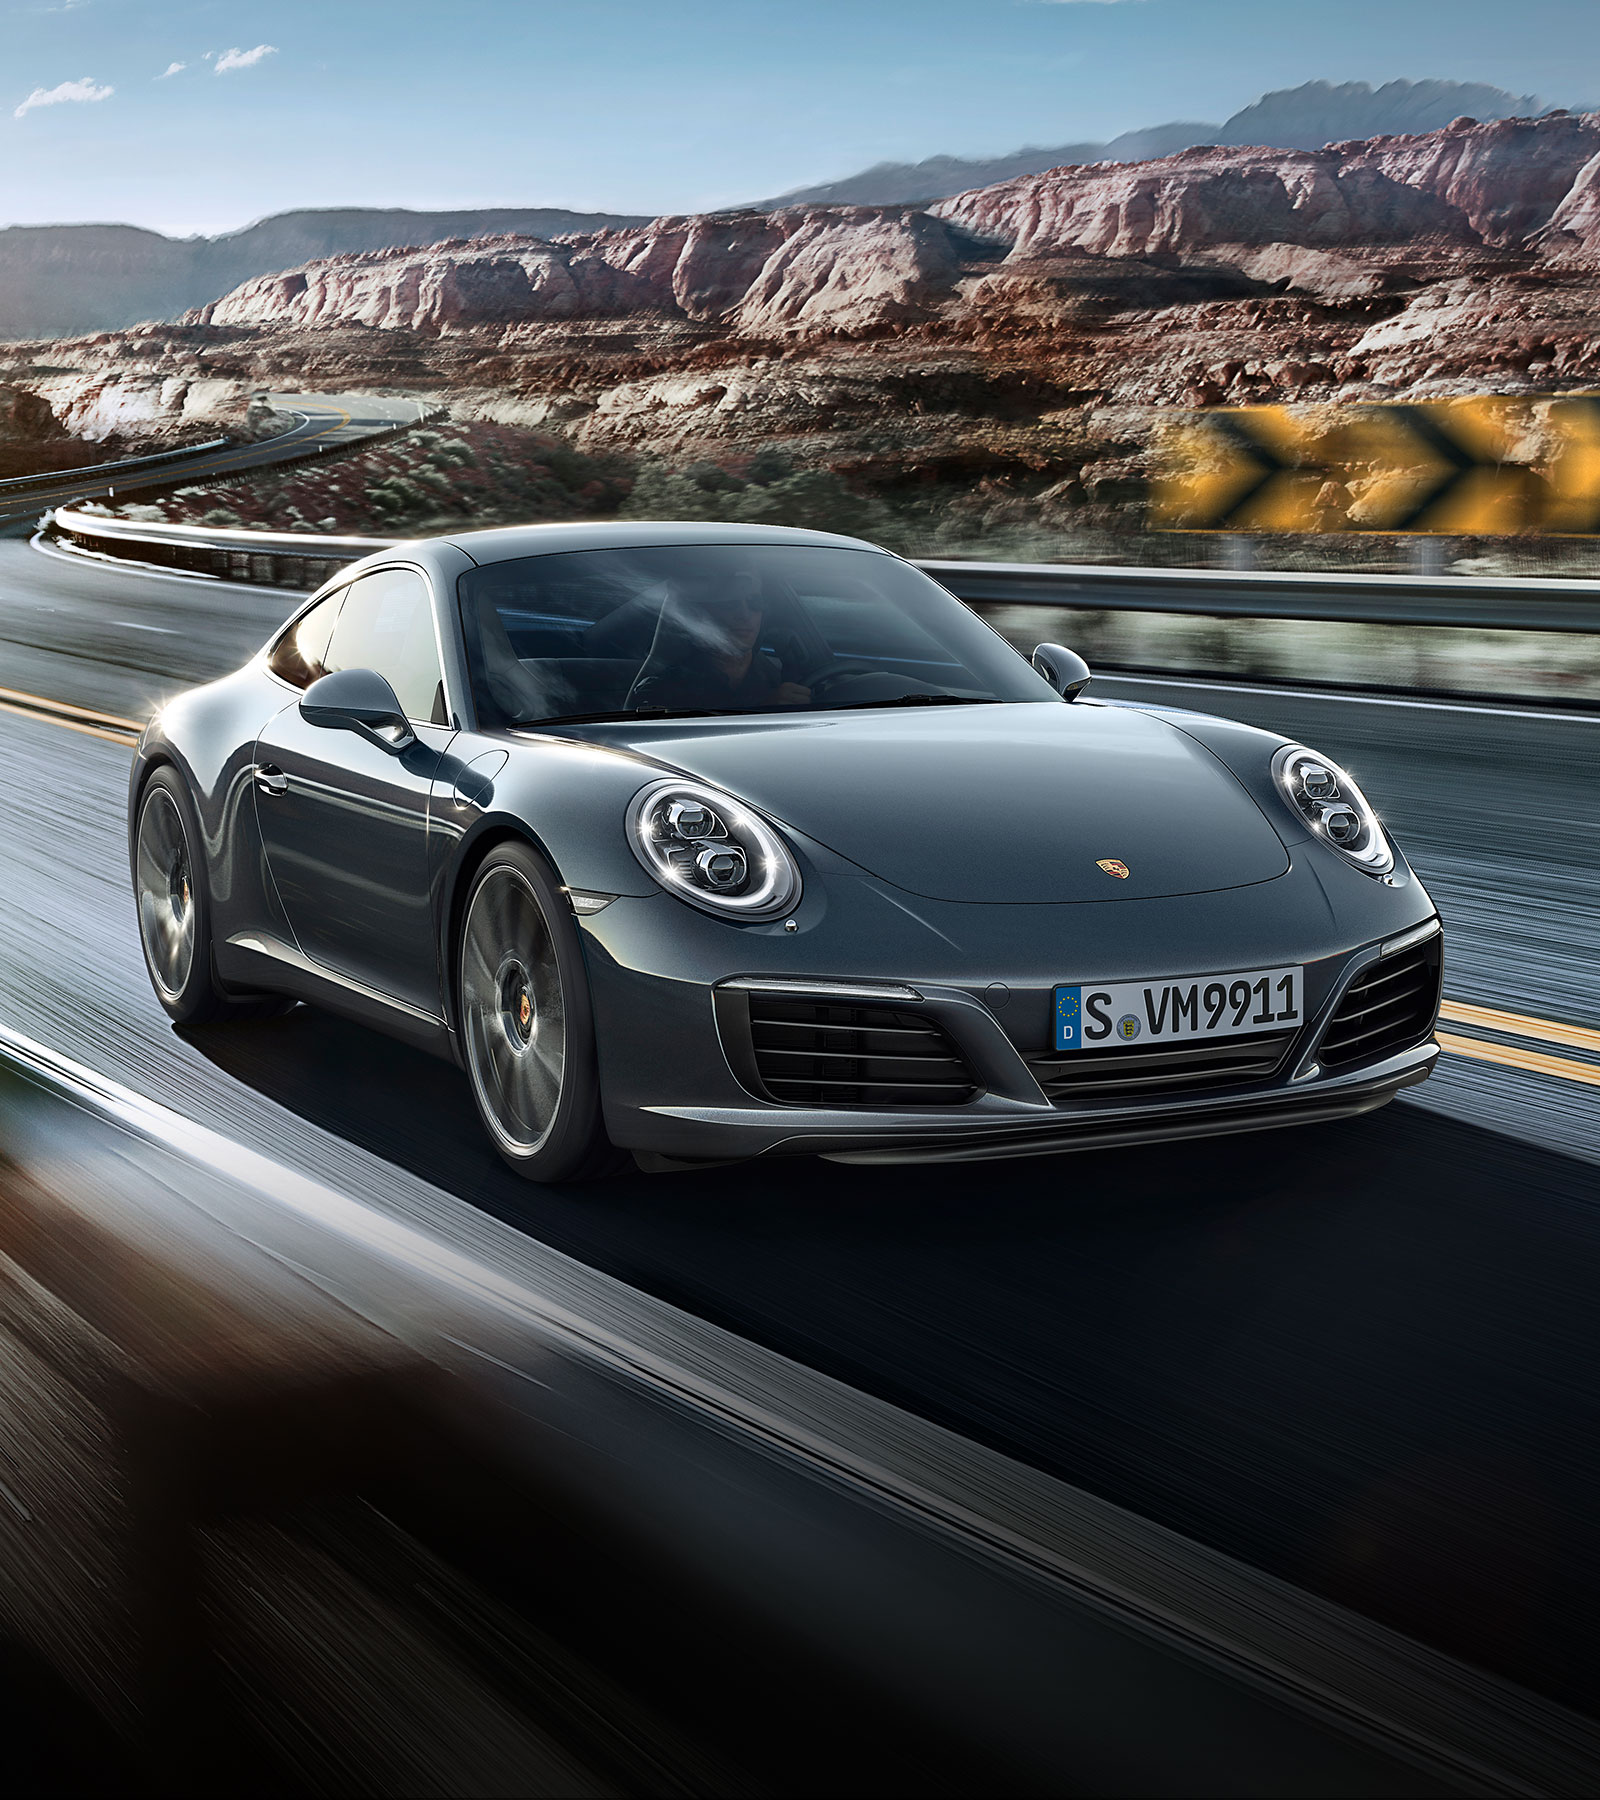 Porsche Connect. Apps for your Porsche - Porsche Cars North America ...